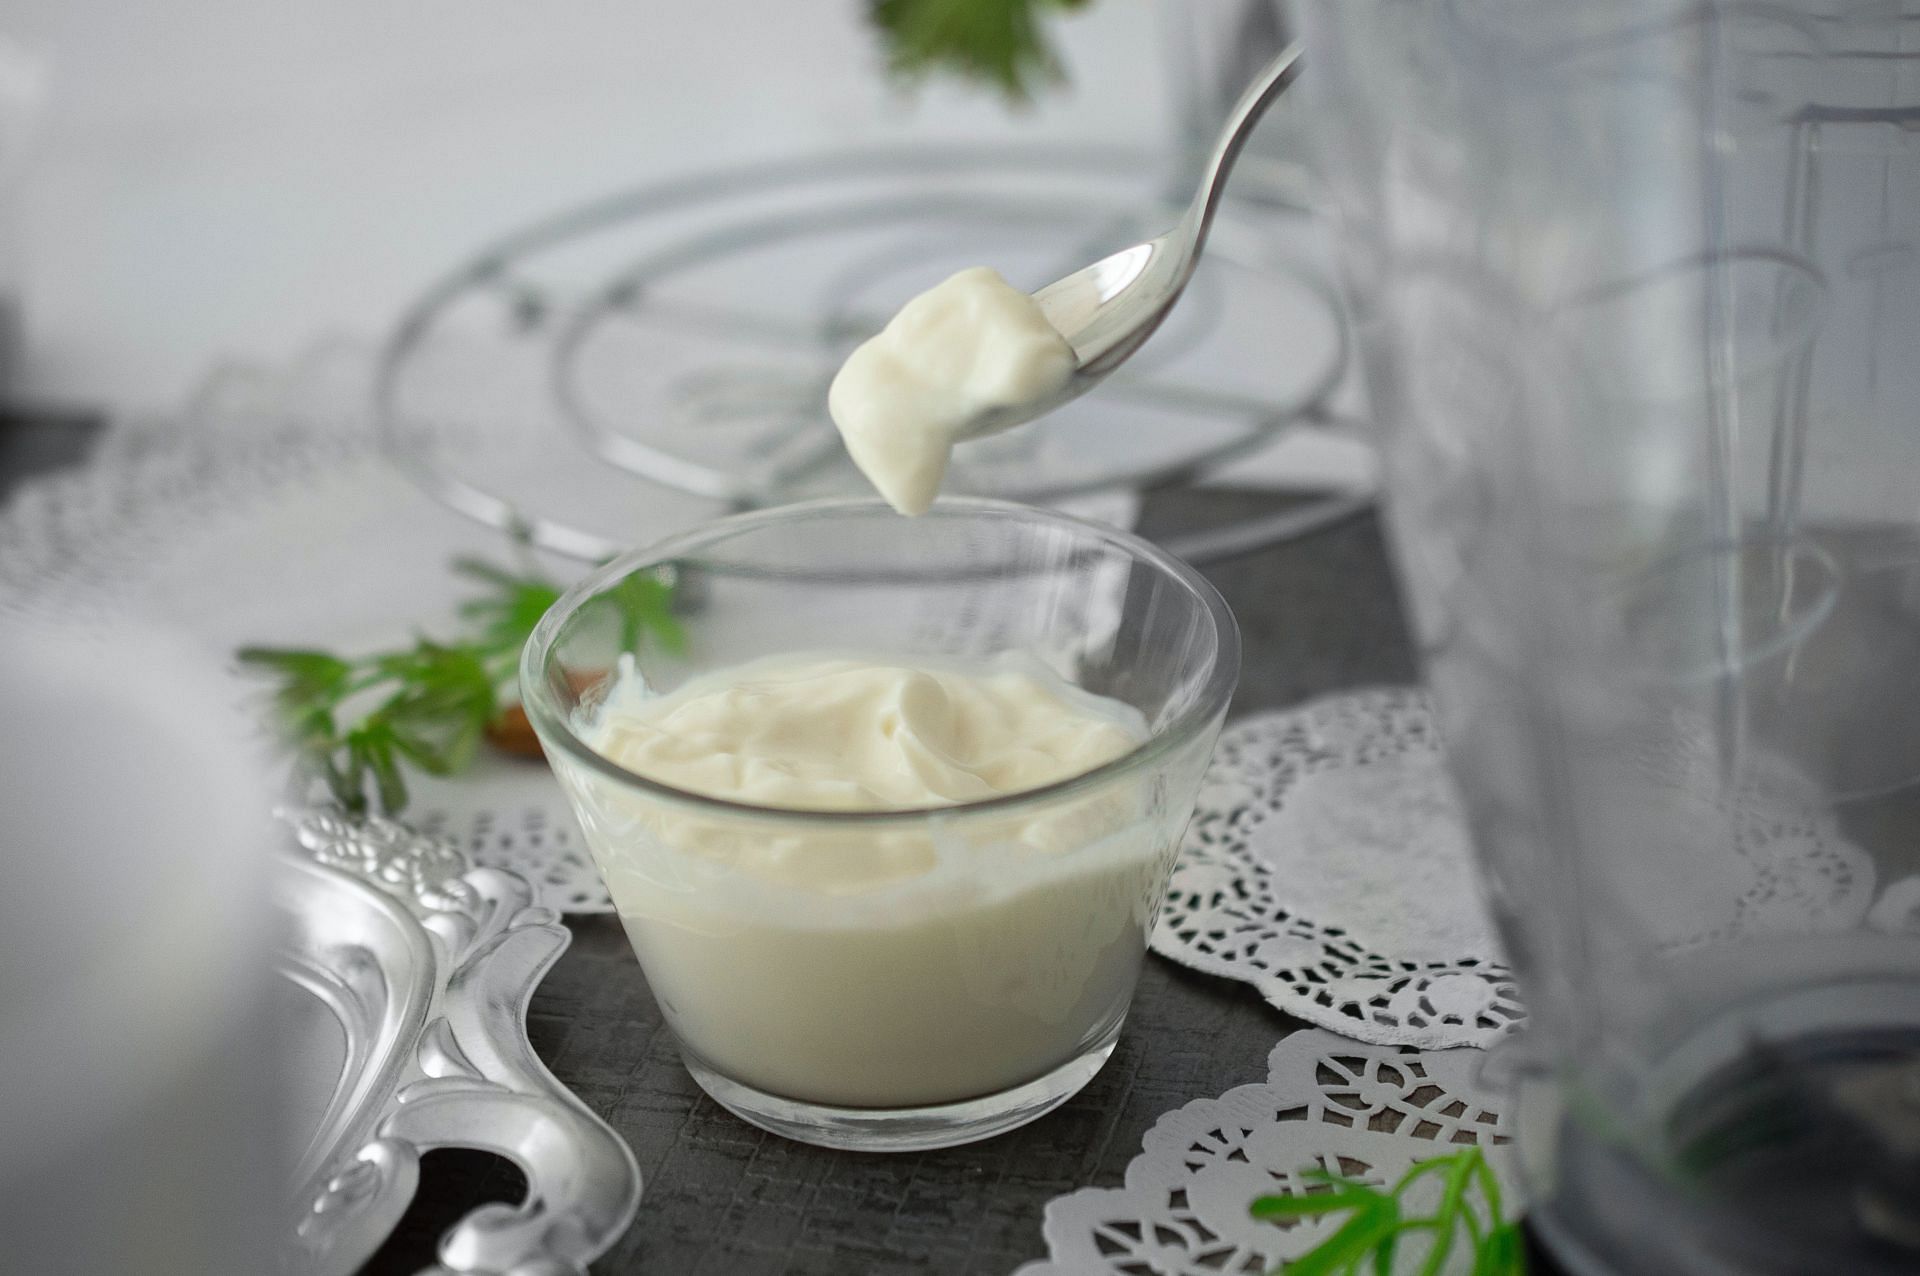 The low-carb profile makes yogurt good for you. (Image via Unsplash/Sara Cervera)